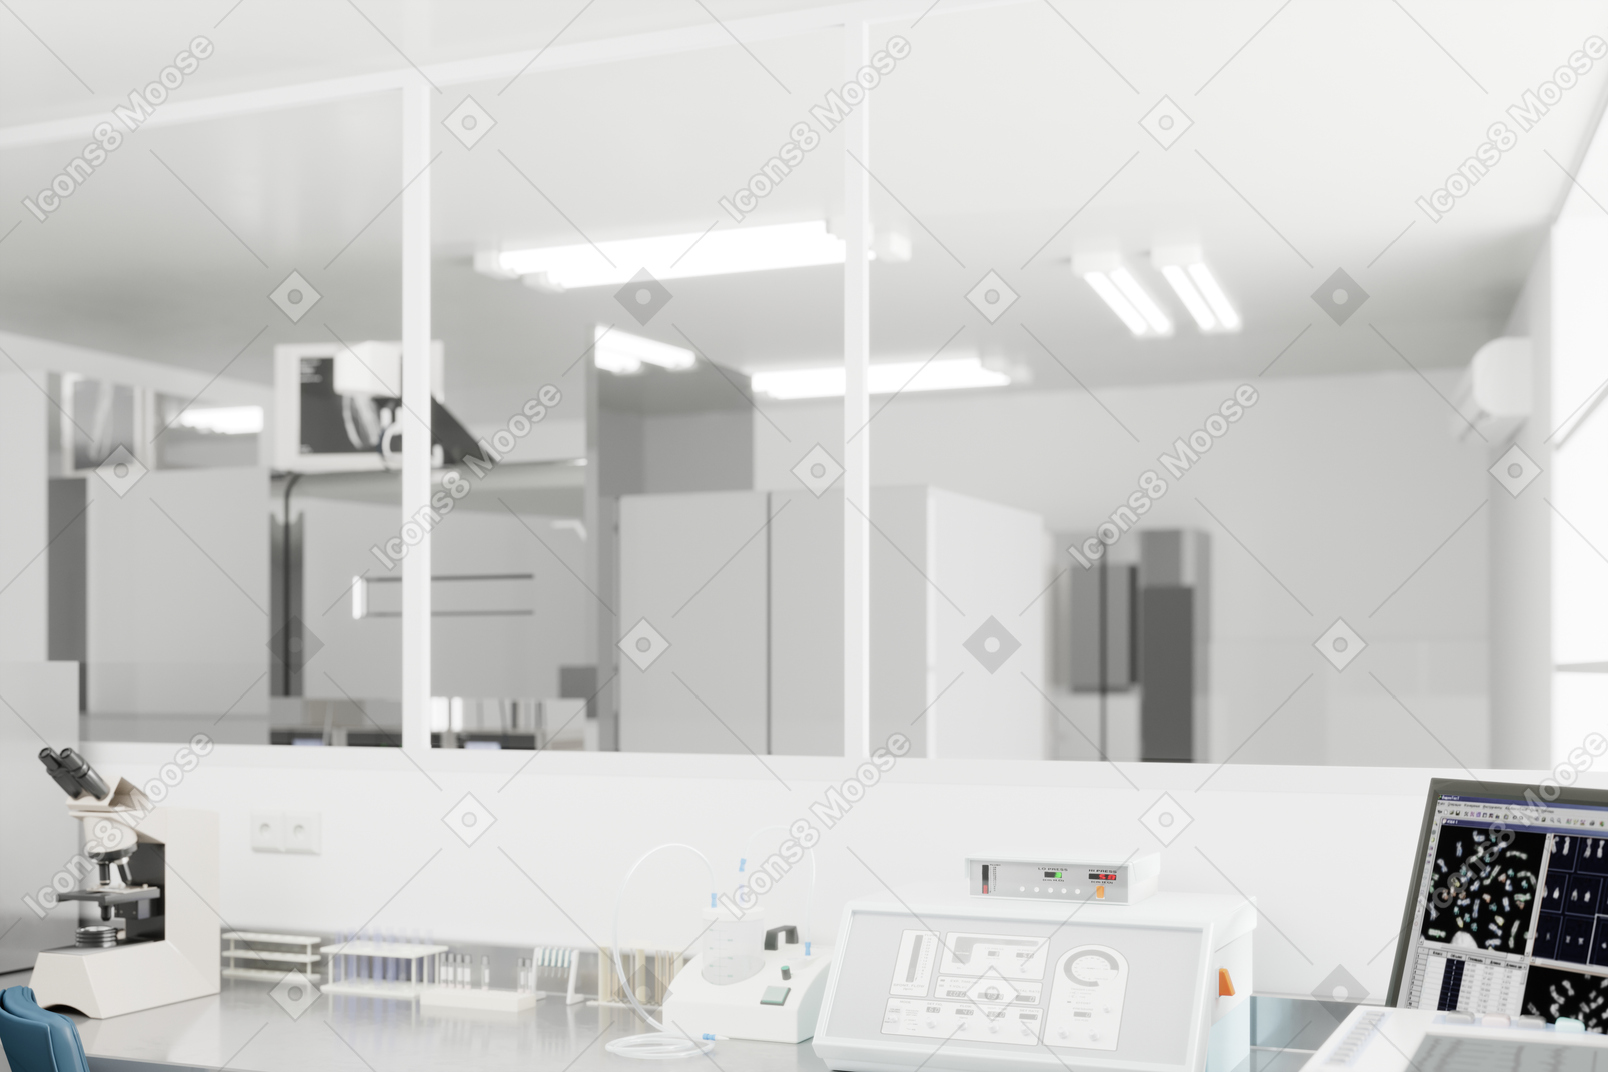 Medical laboratory room